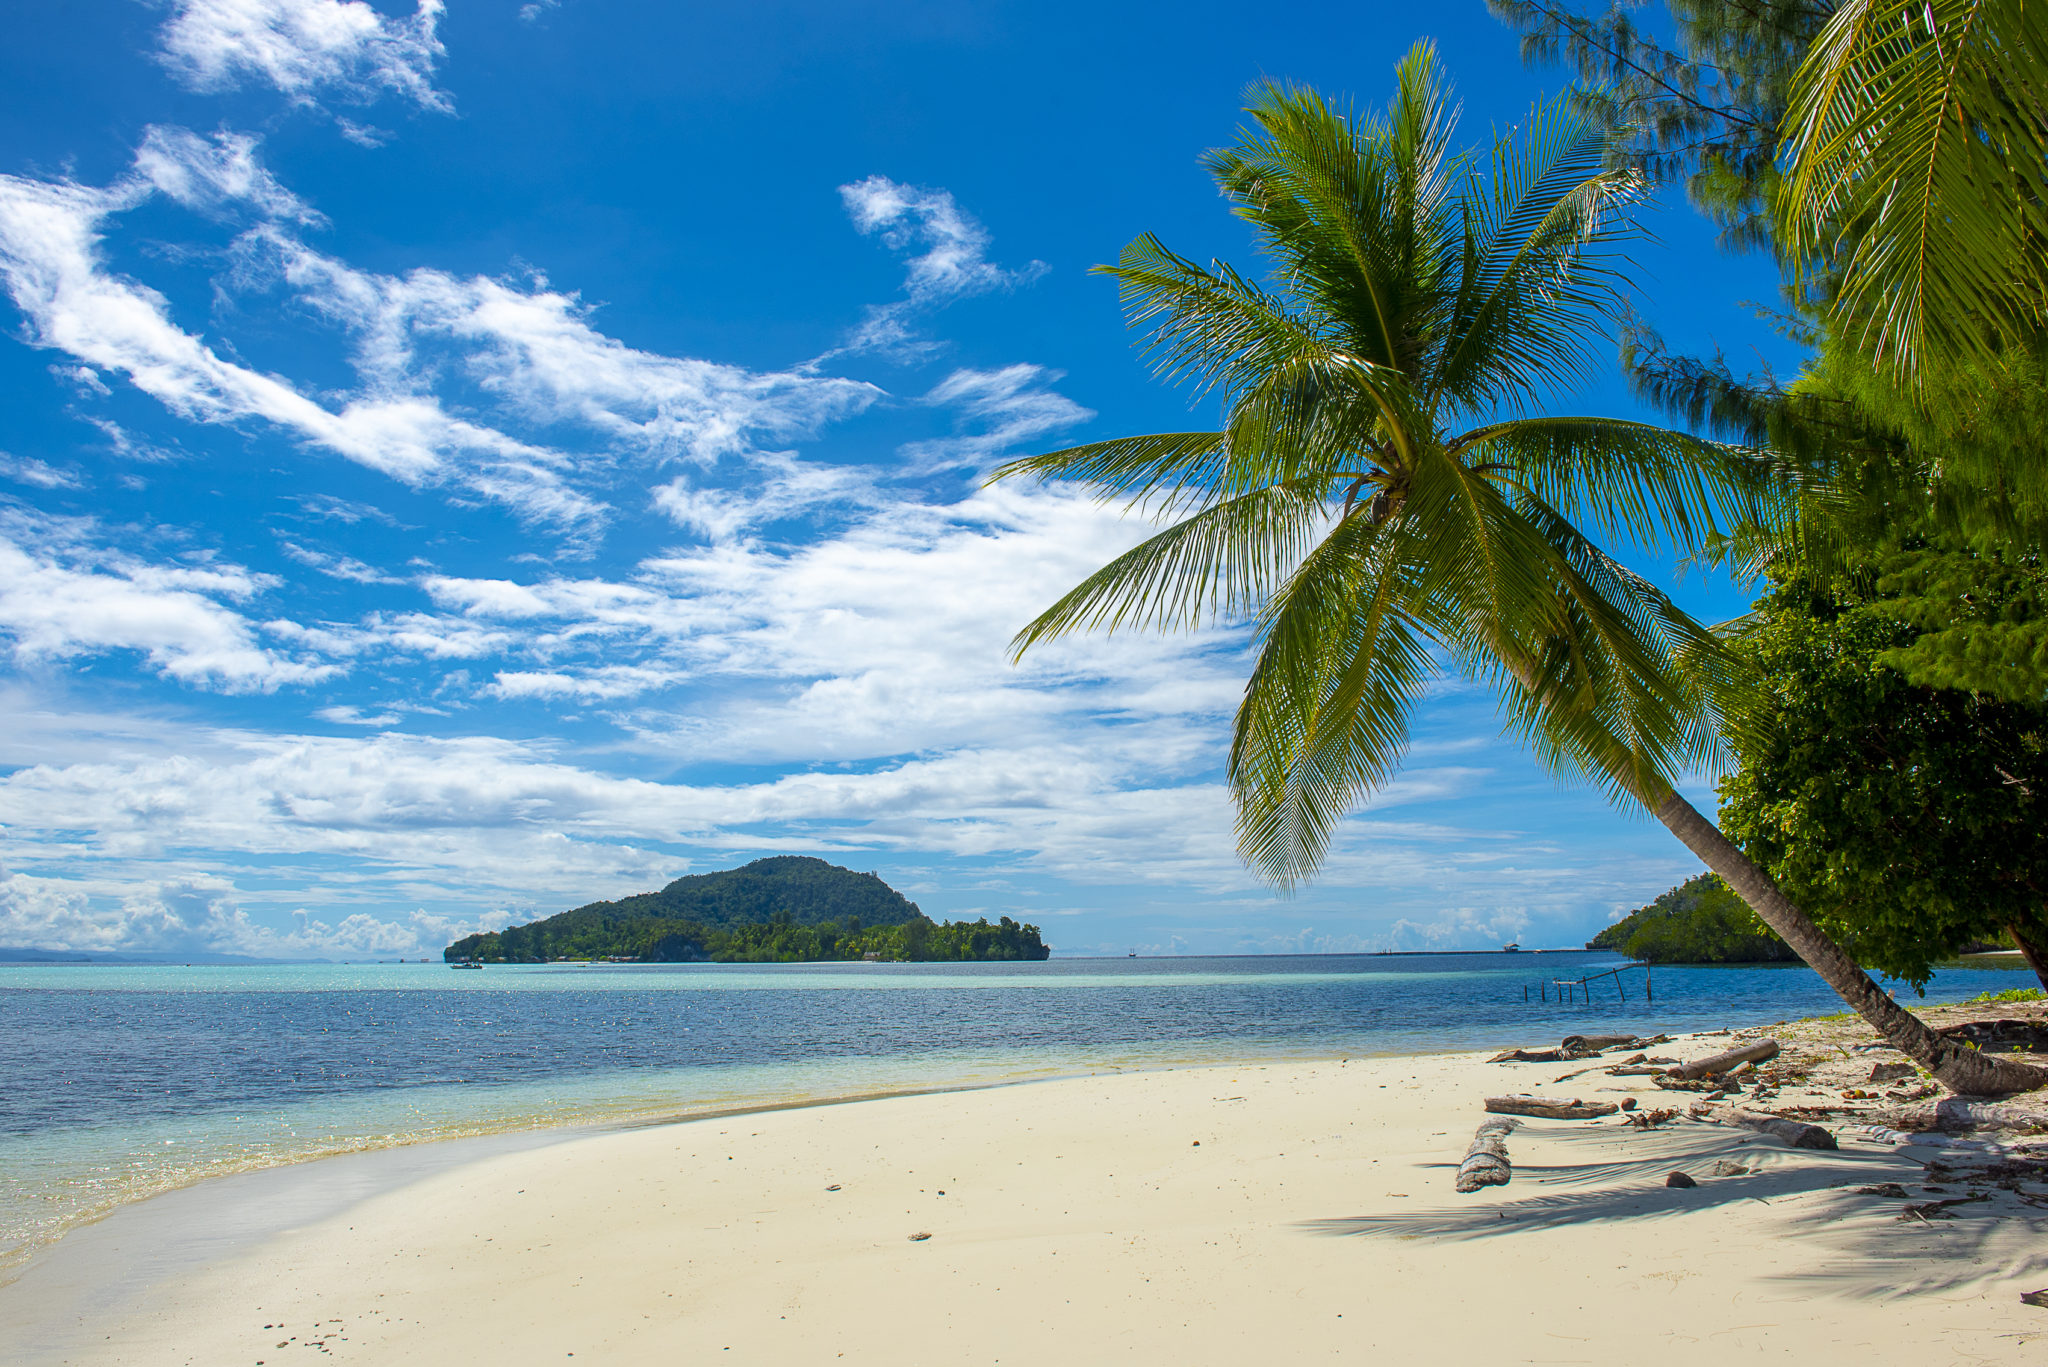 Beachview Raja Ampats – Indo Papua